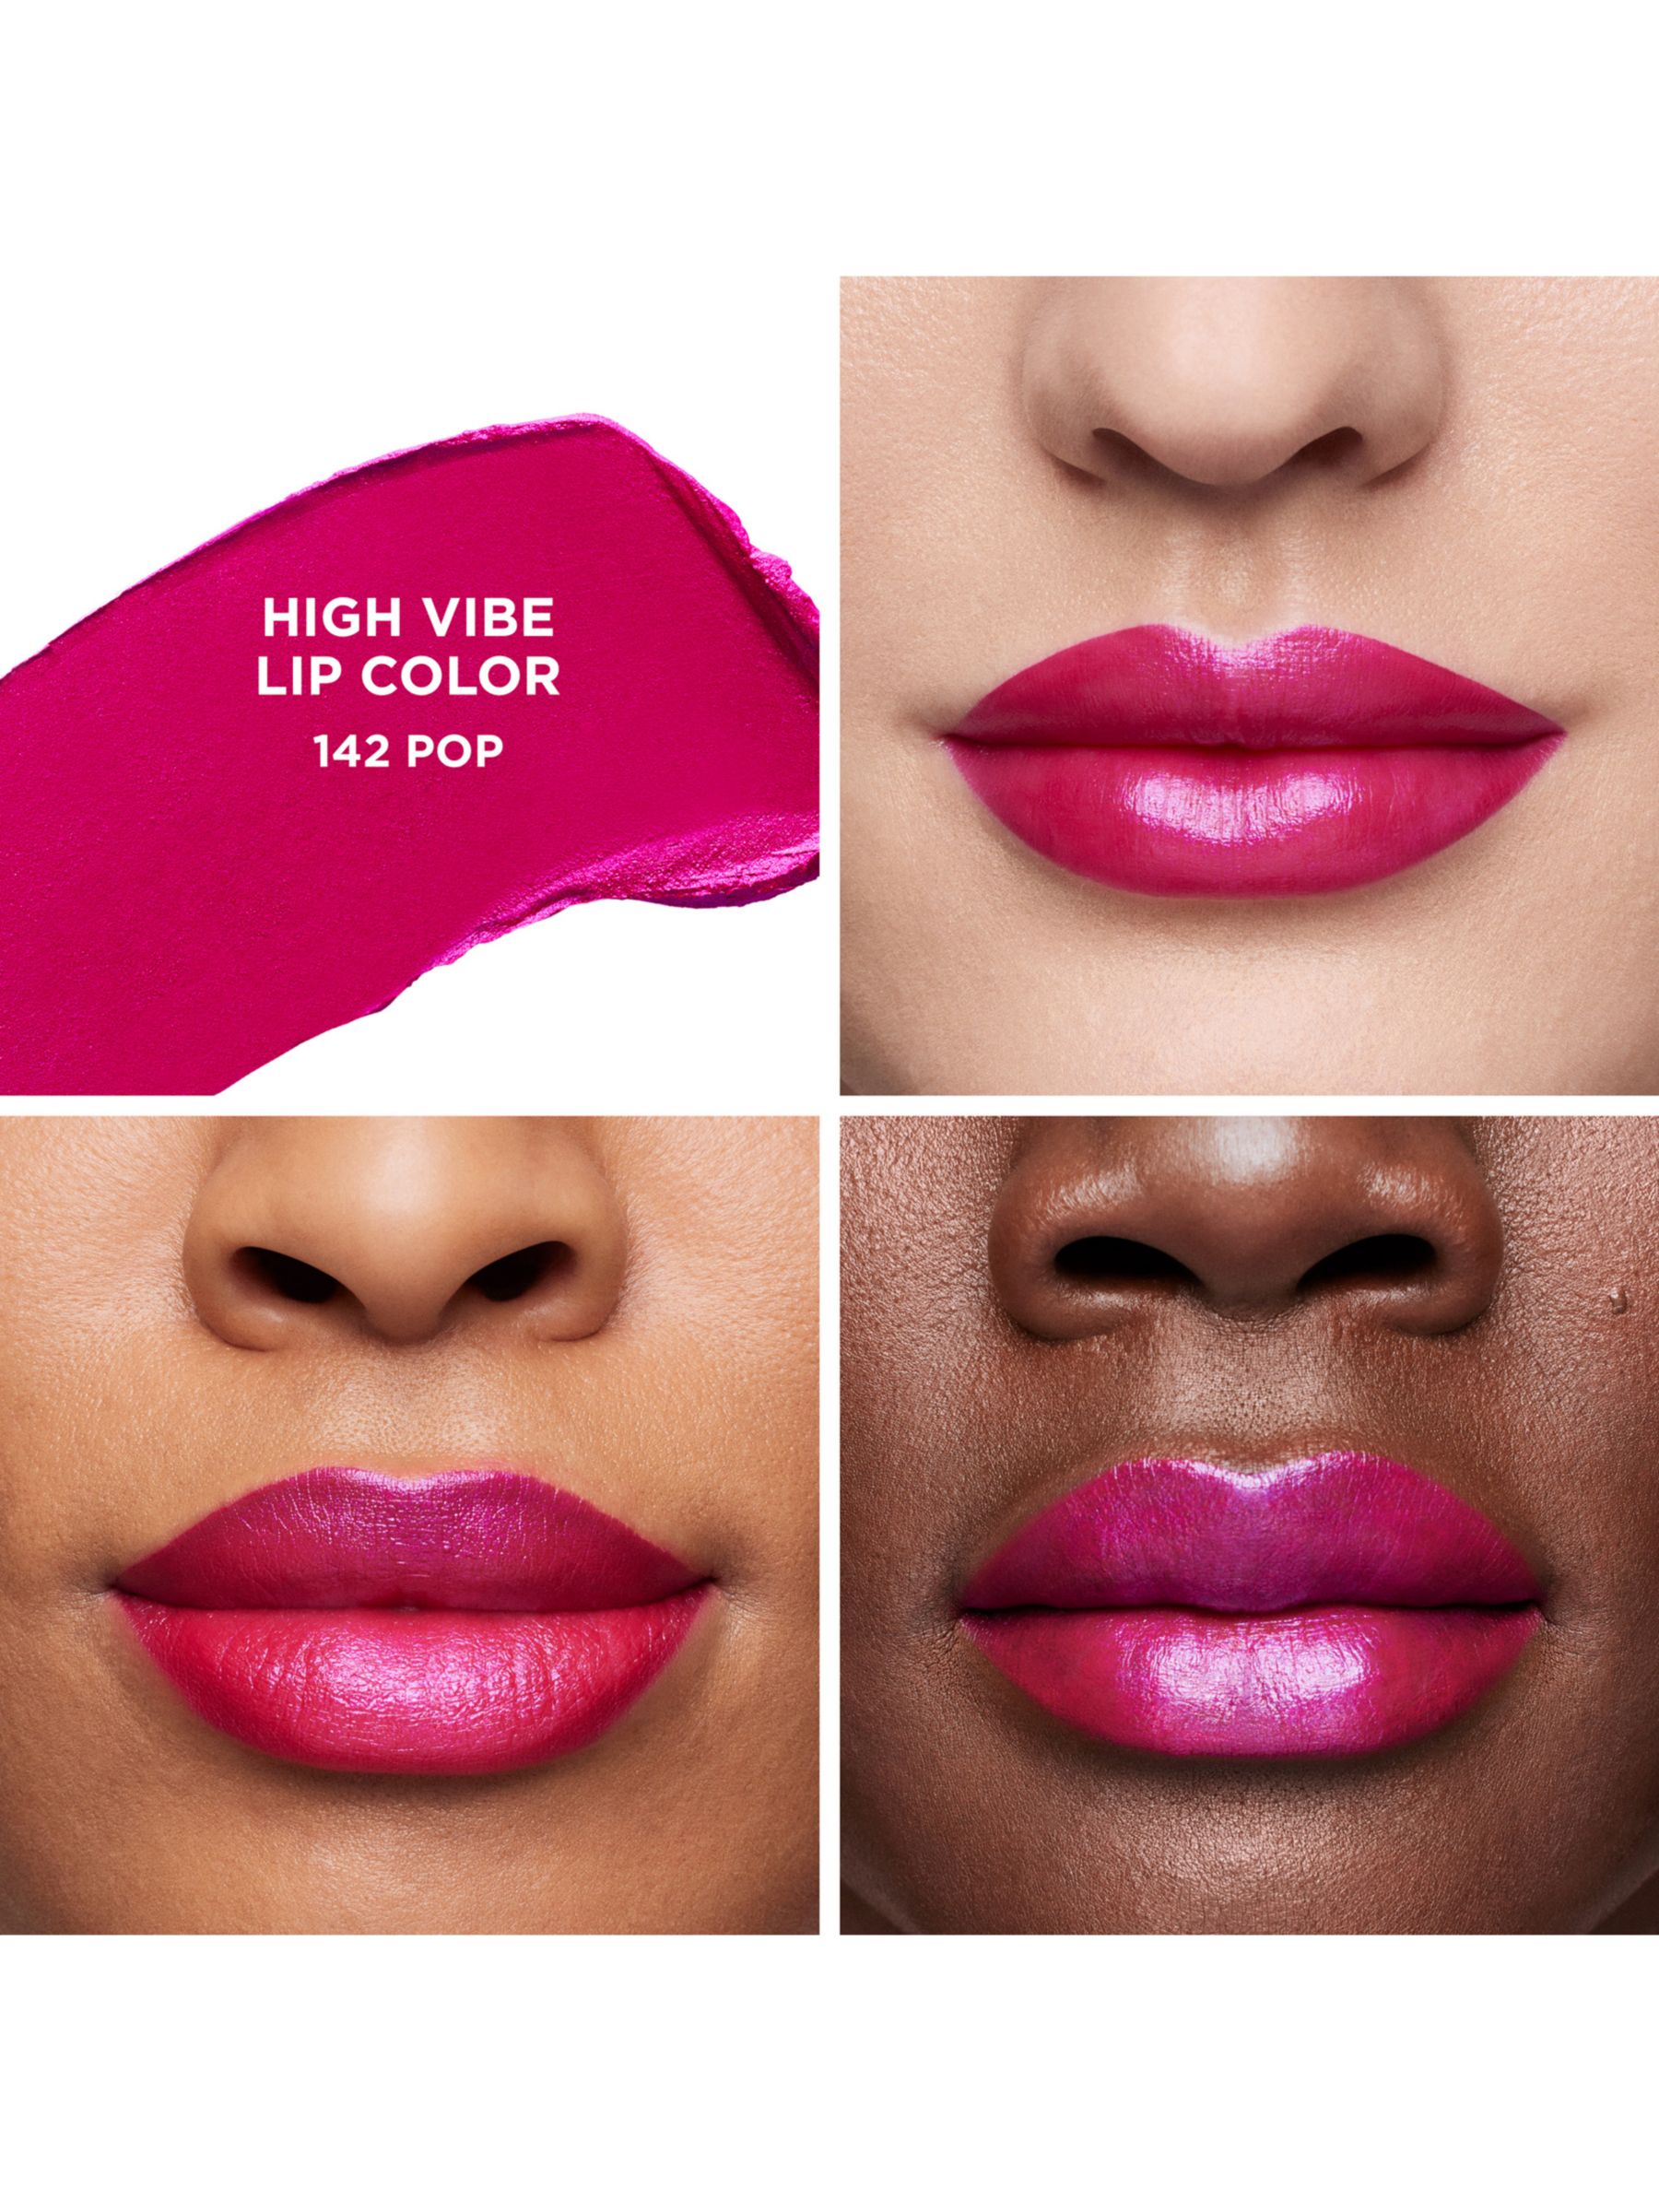 Laura Mercier High Vibe Lip Colour Lipstick, 142 Pop